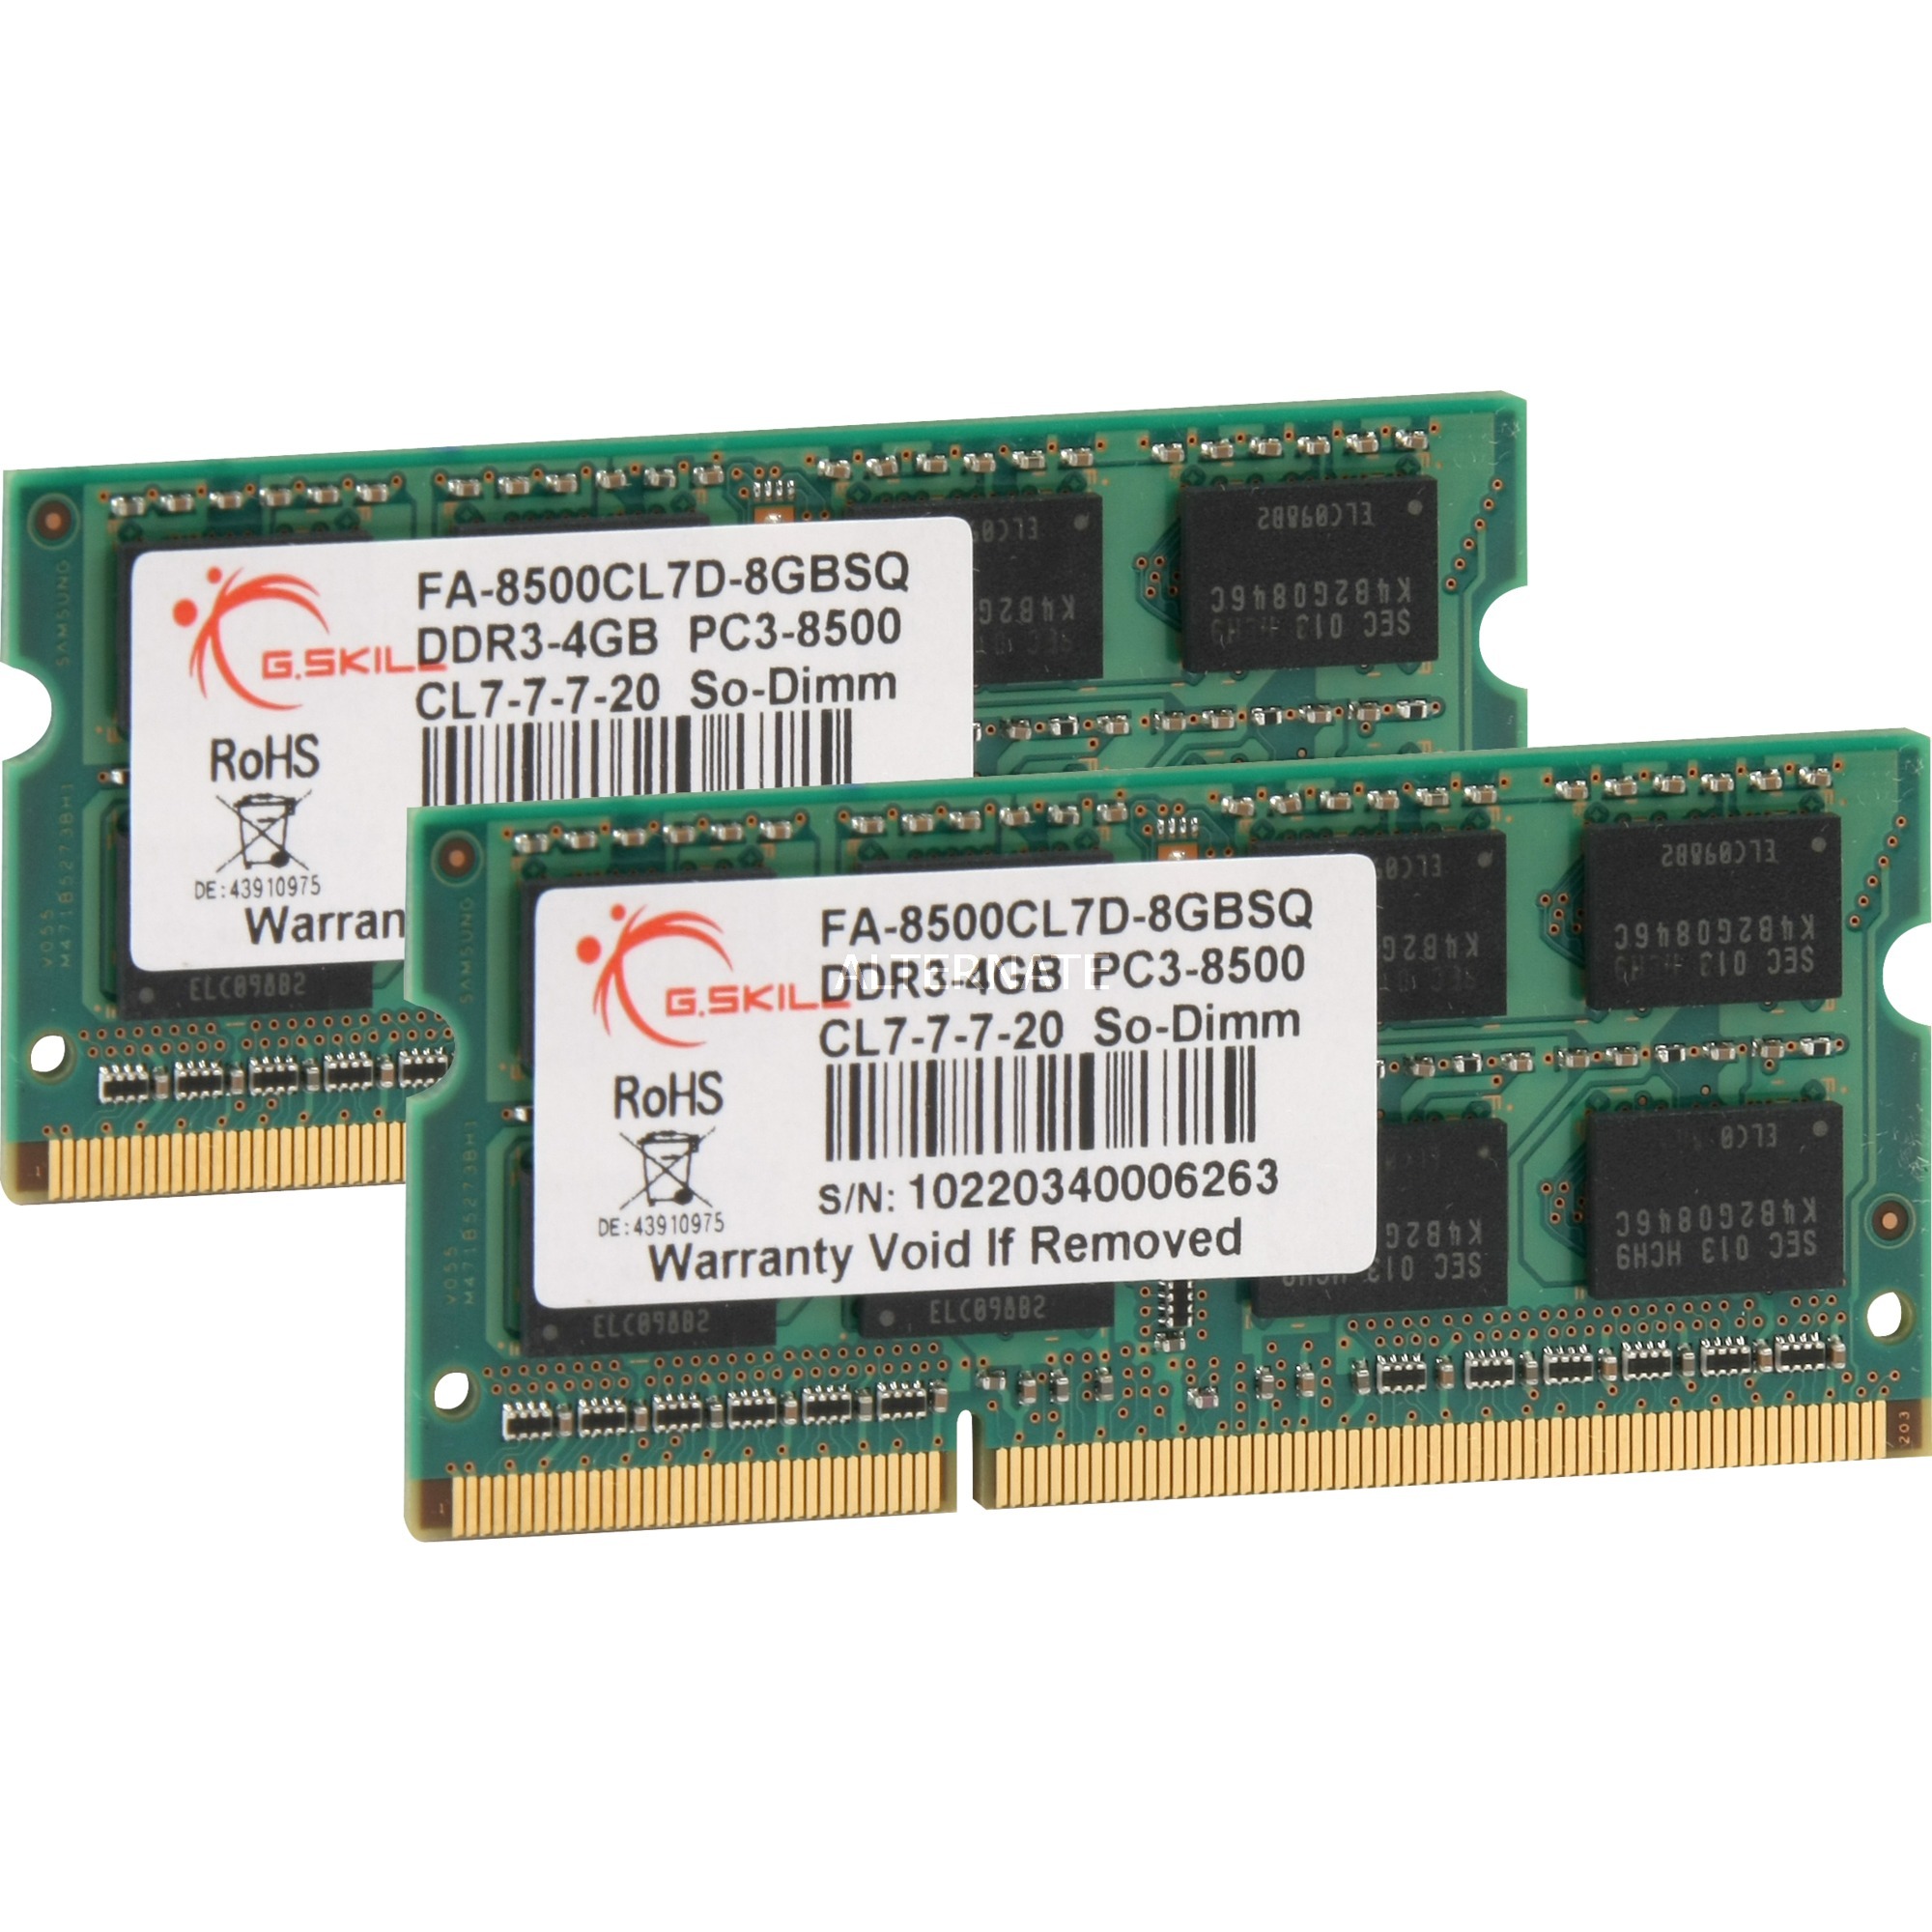 FA-8500CL7D-8GBSQ 8GB DDR3 1066Mhz moduł pamięci, Pamięc operacyjna